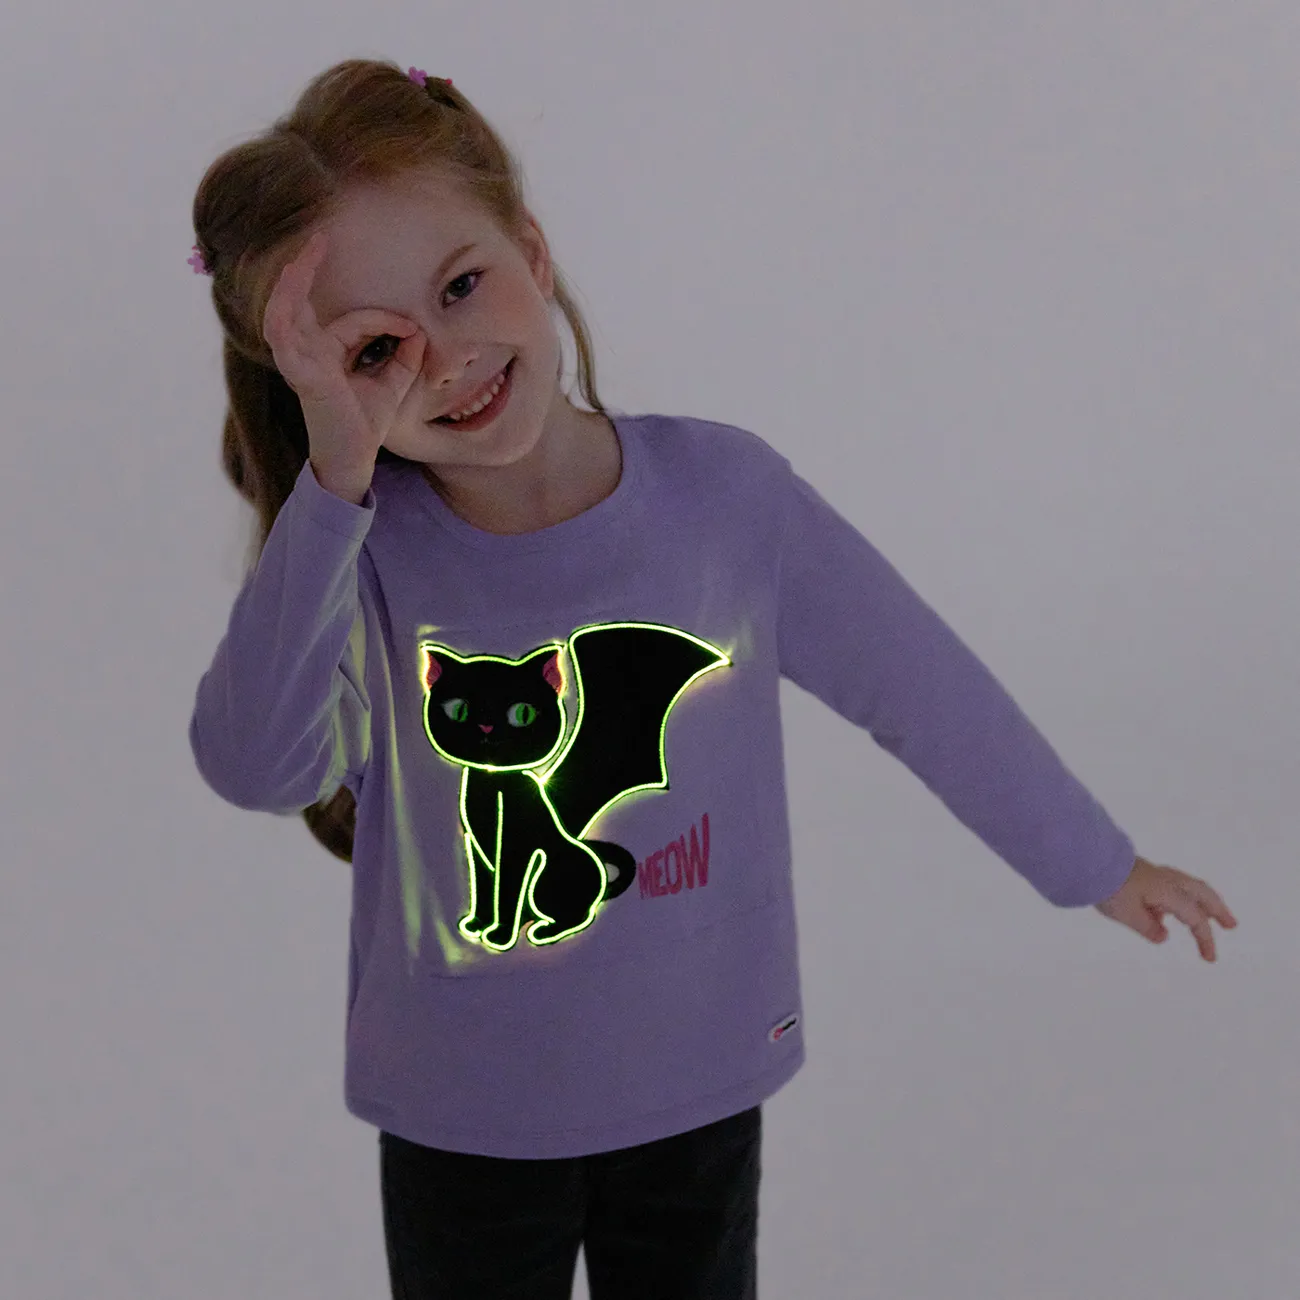 Go-Glow Illuminating Sweatshirt with Light Up Black Cat Including Controller (Built-In Battery) Light Purple big image 1